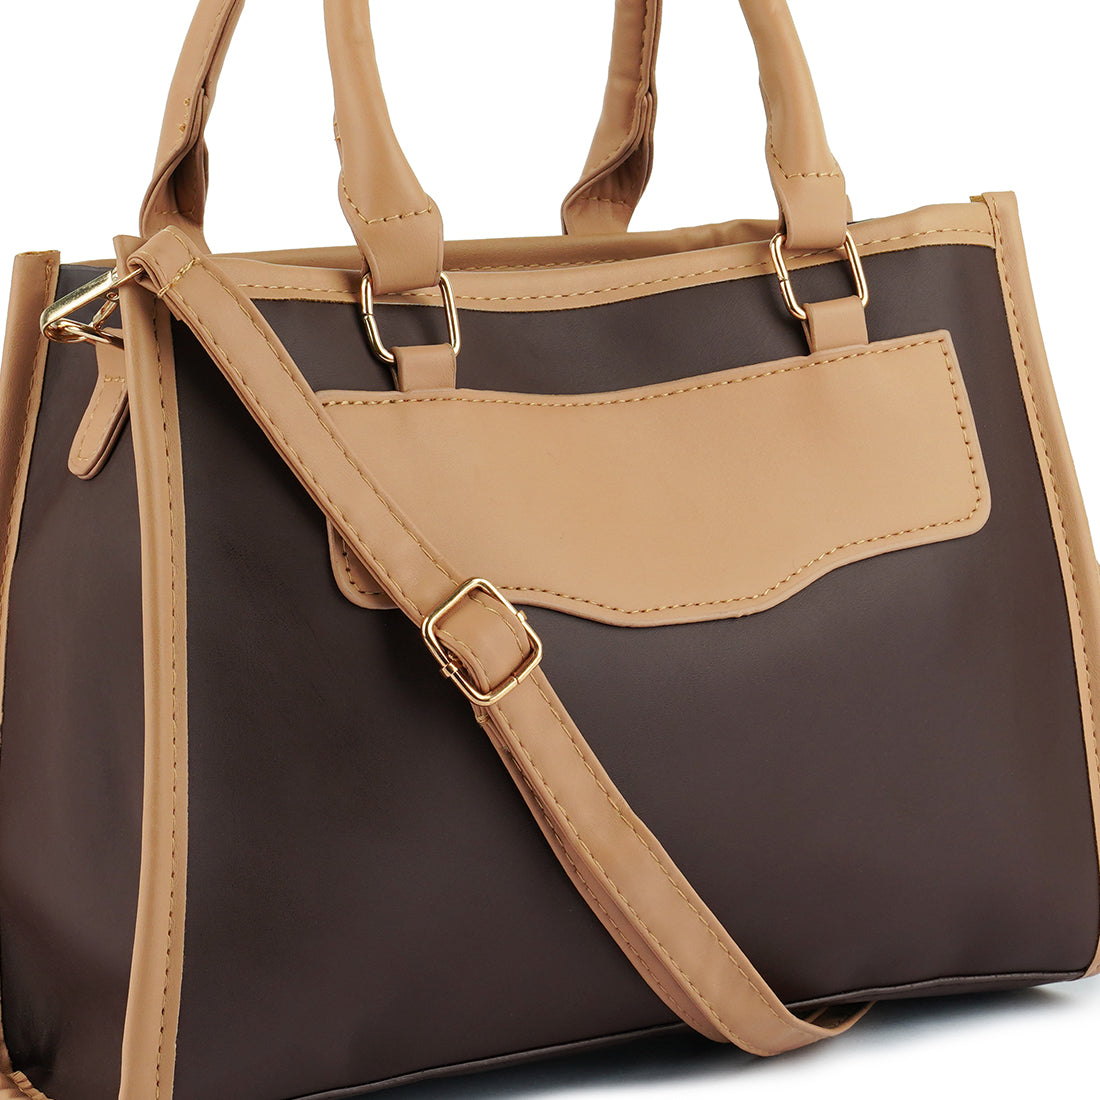 color block tote bag#color_brown